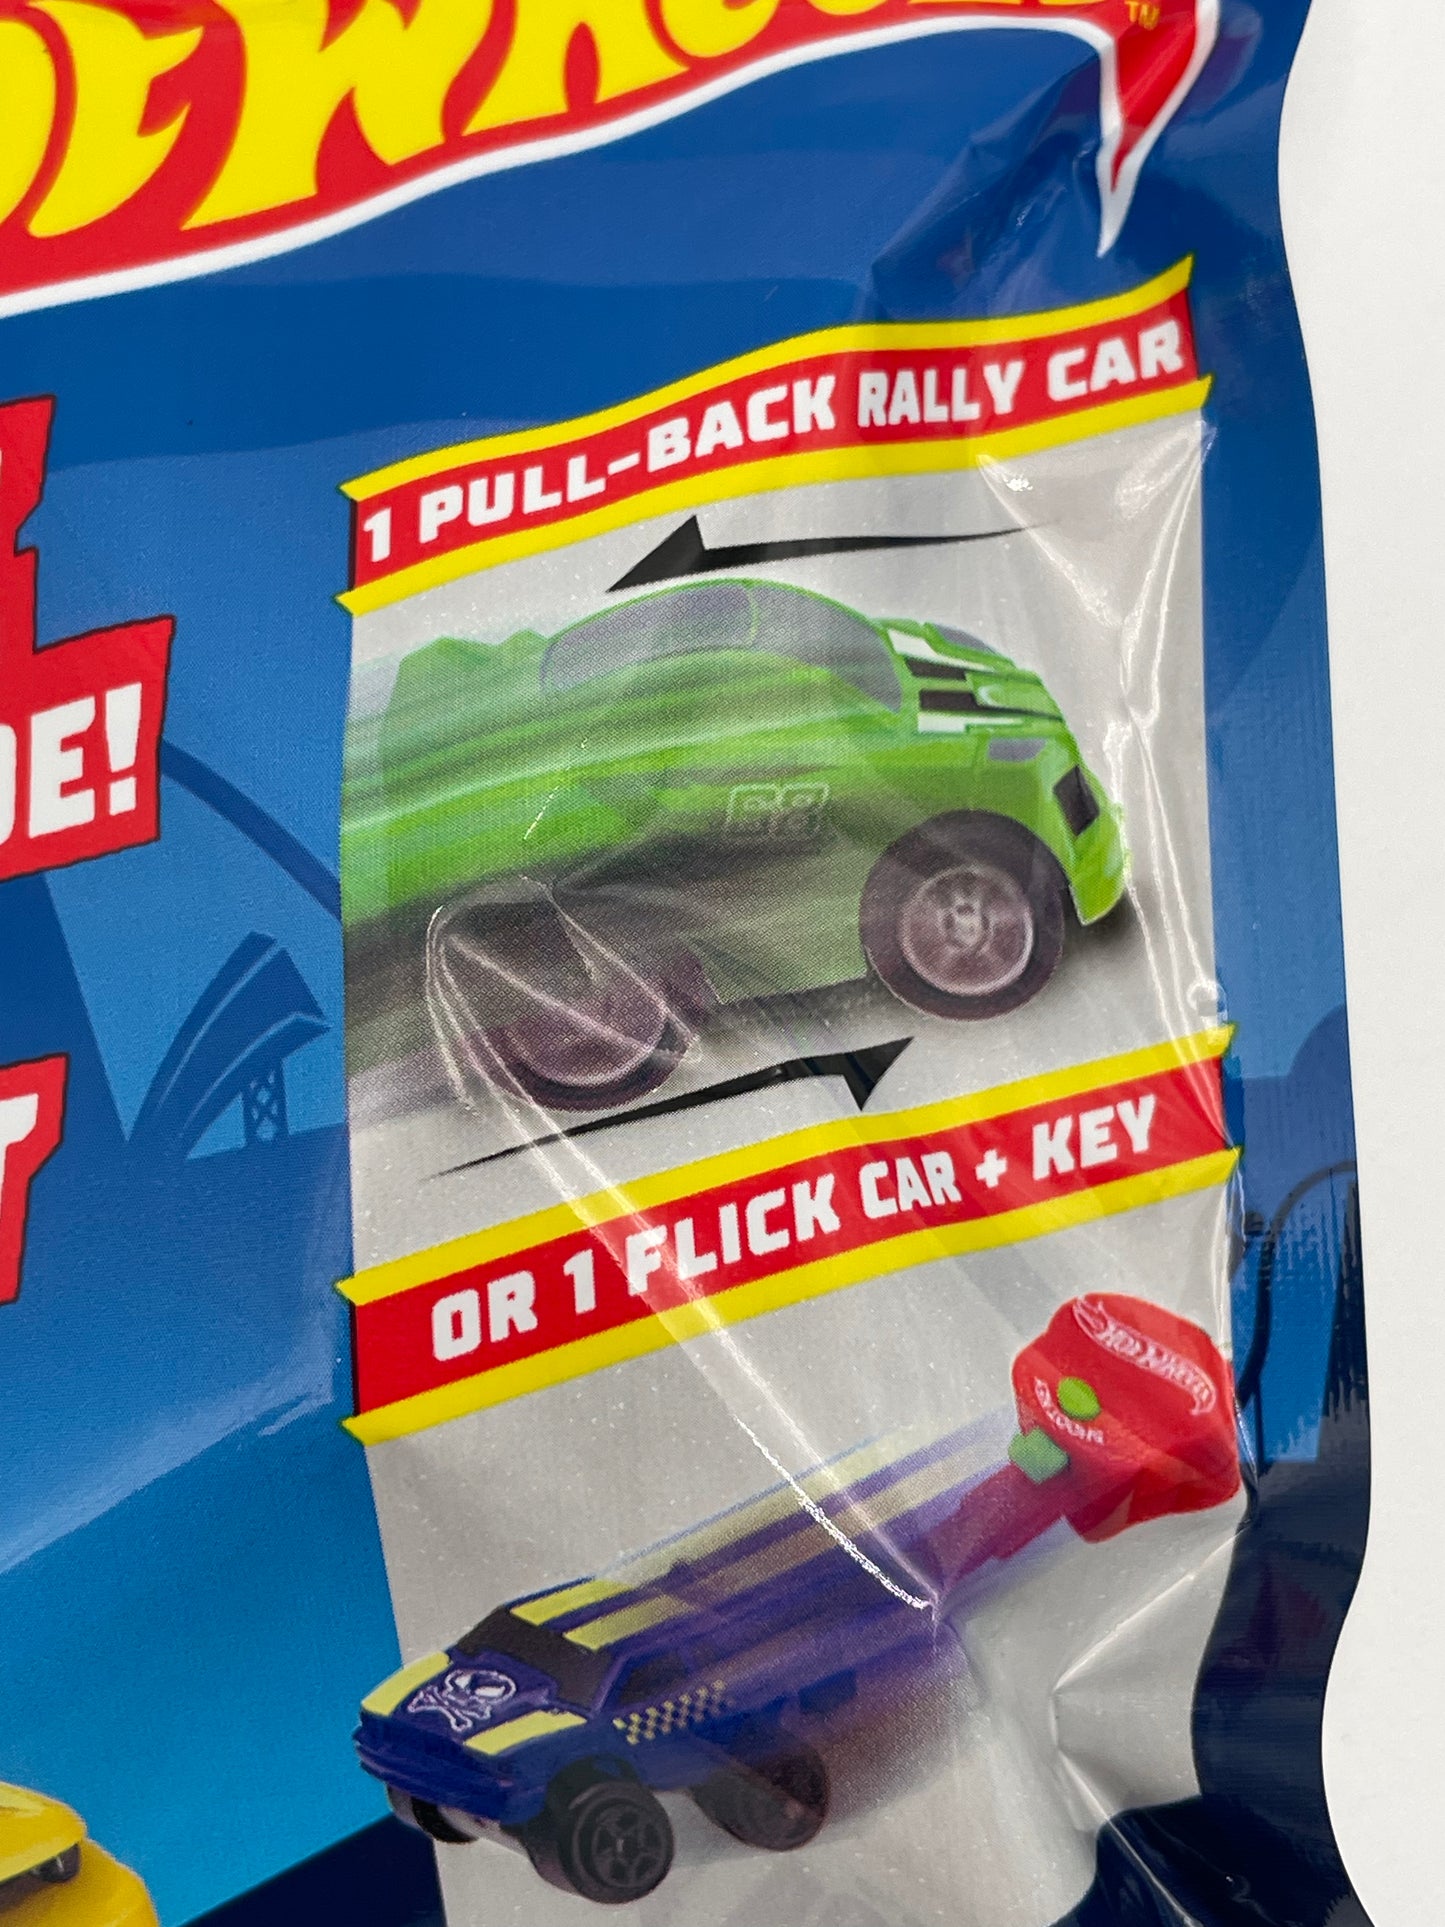 Hot Wheels - Mystery Pack Car & Slime 2021 #102778